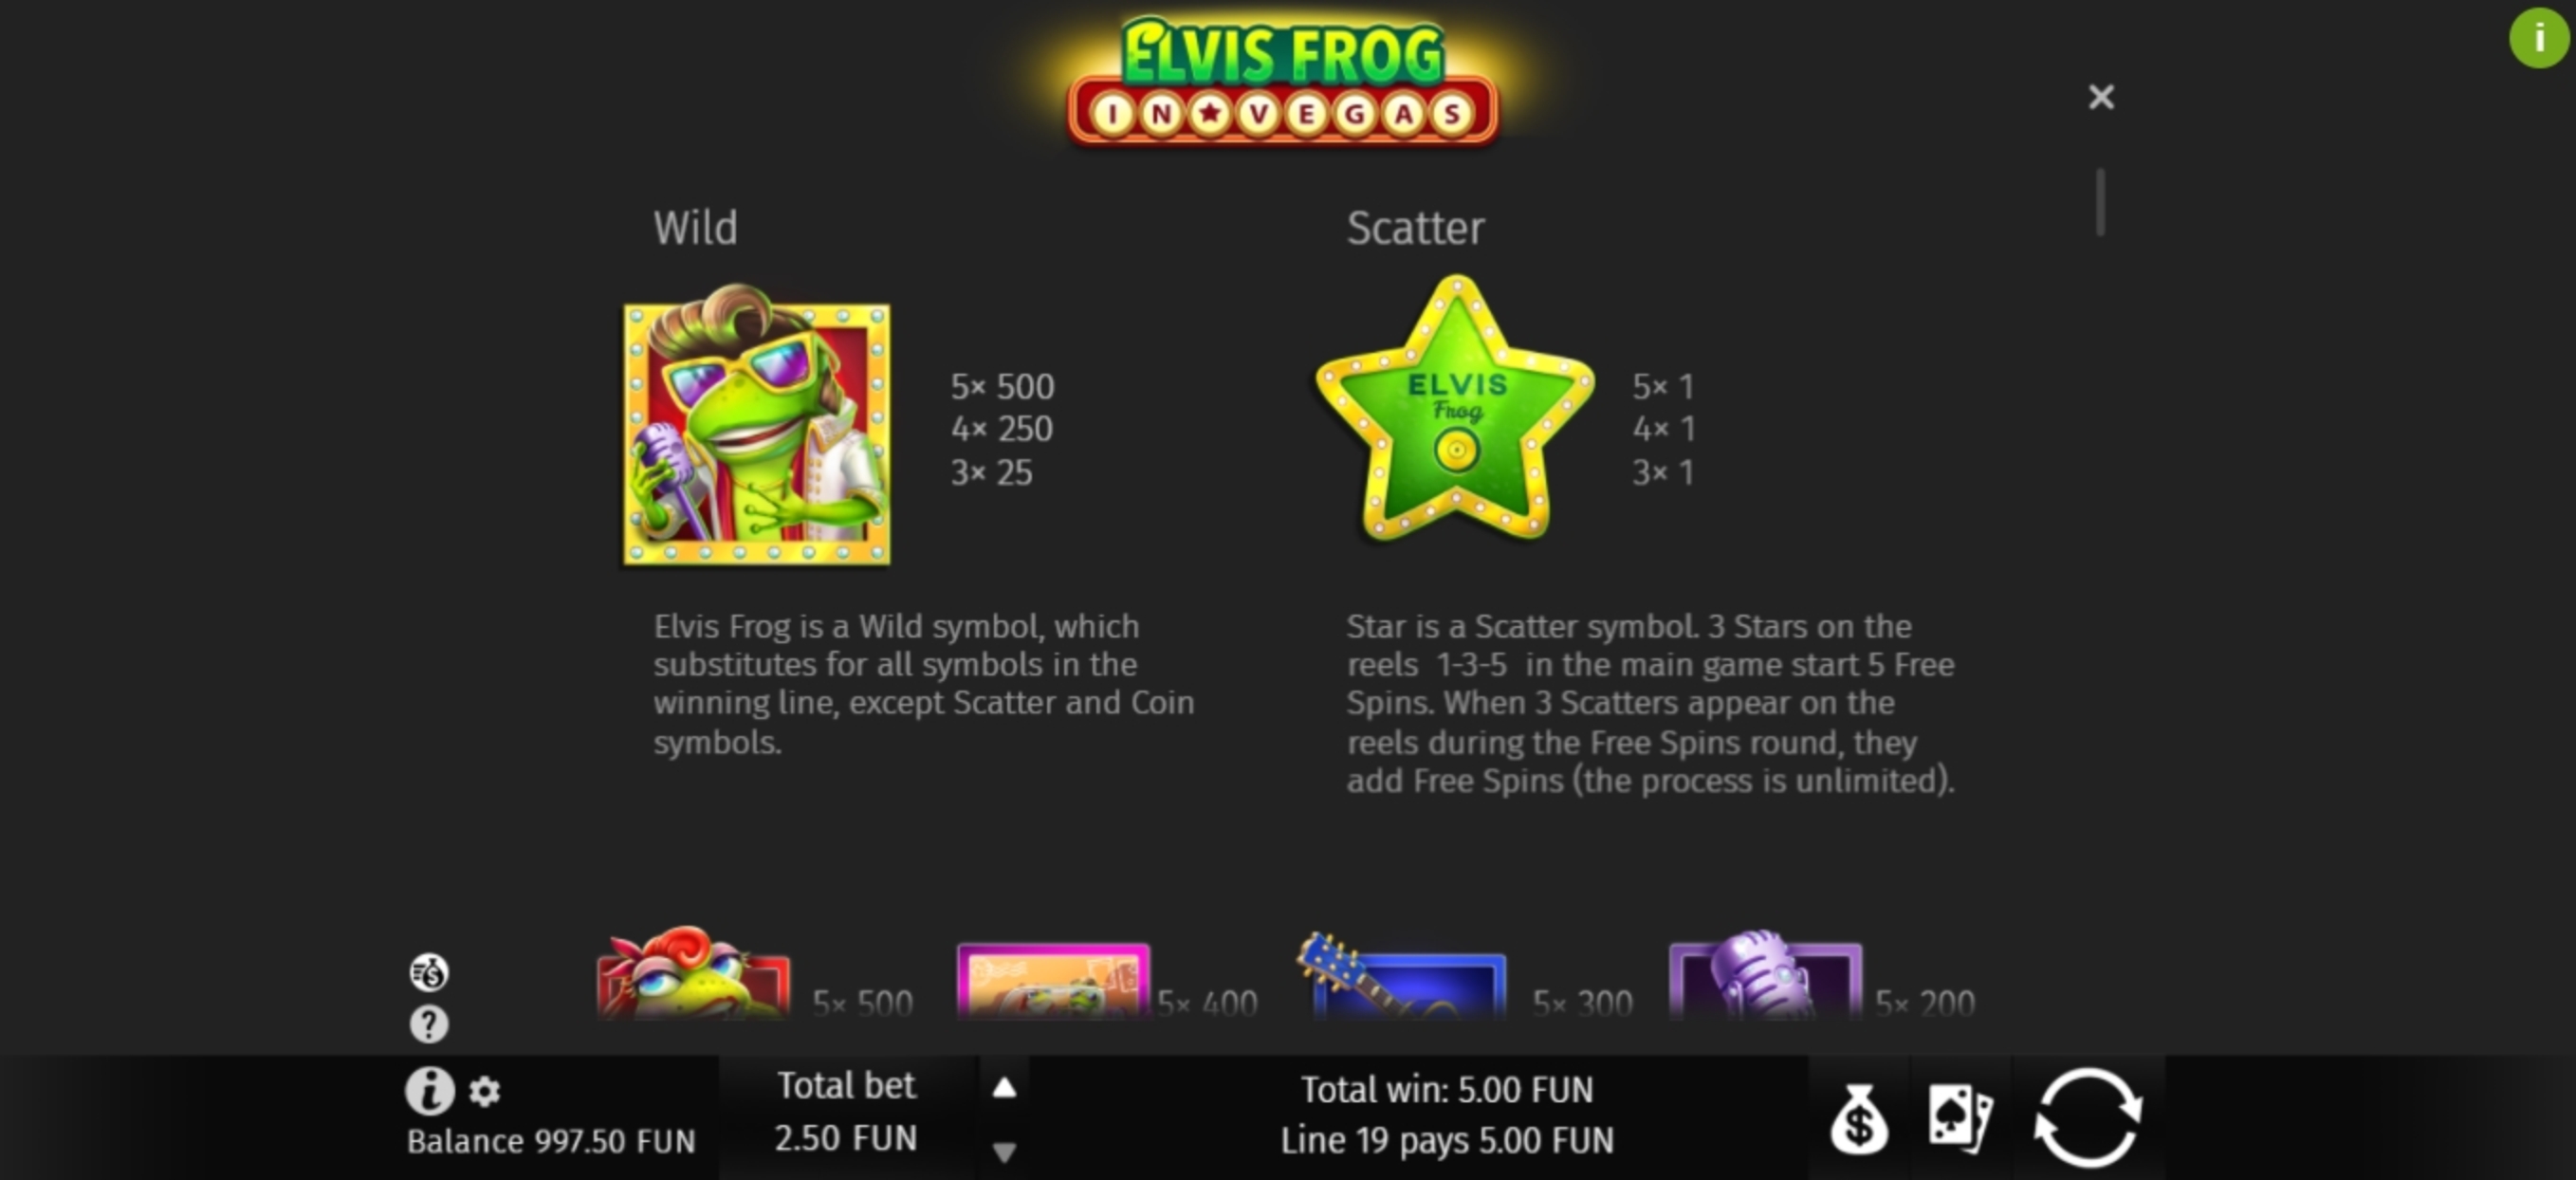 Info of Elvis Frog in Vegas Slot Game by BGAMING